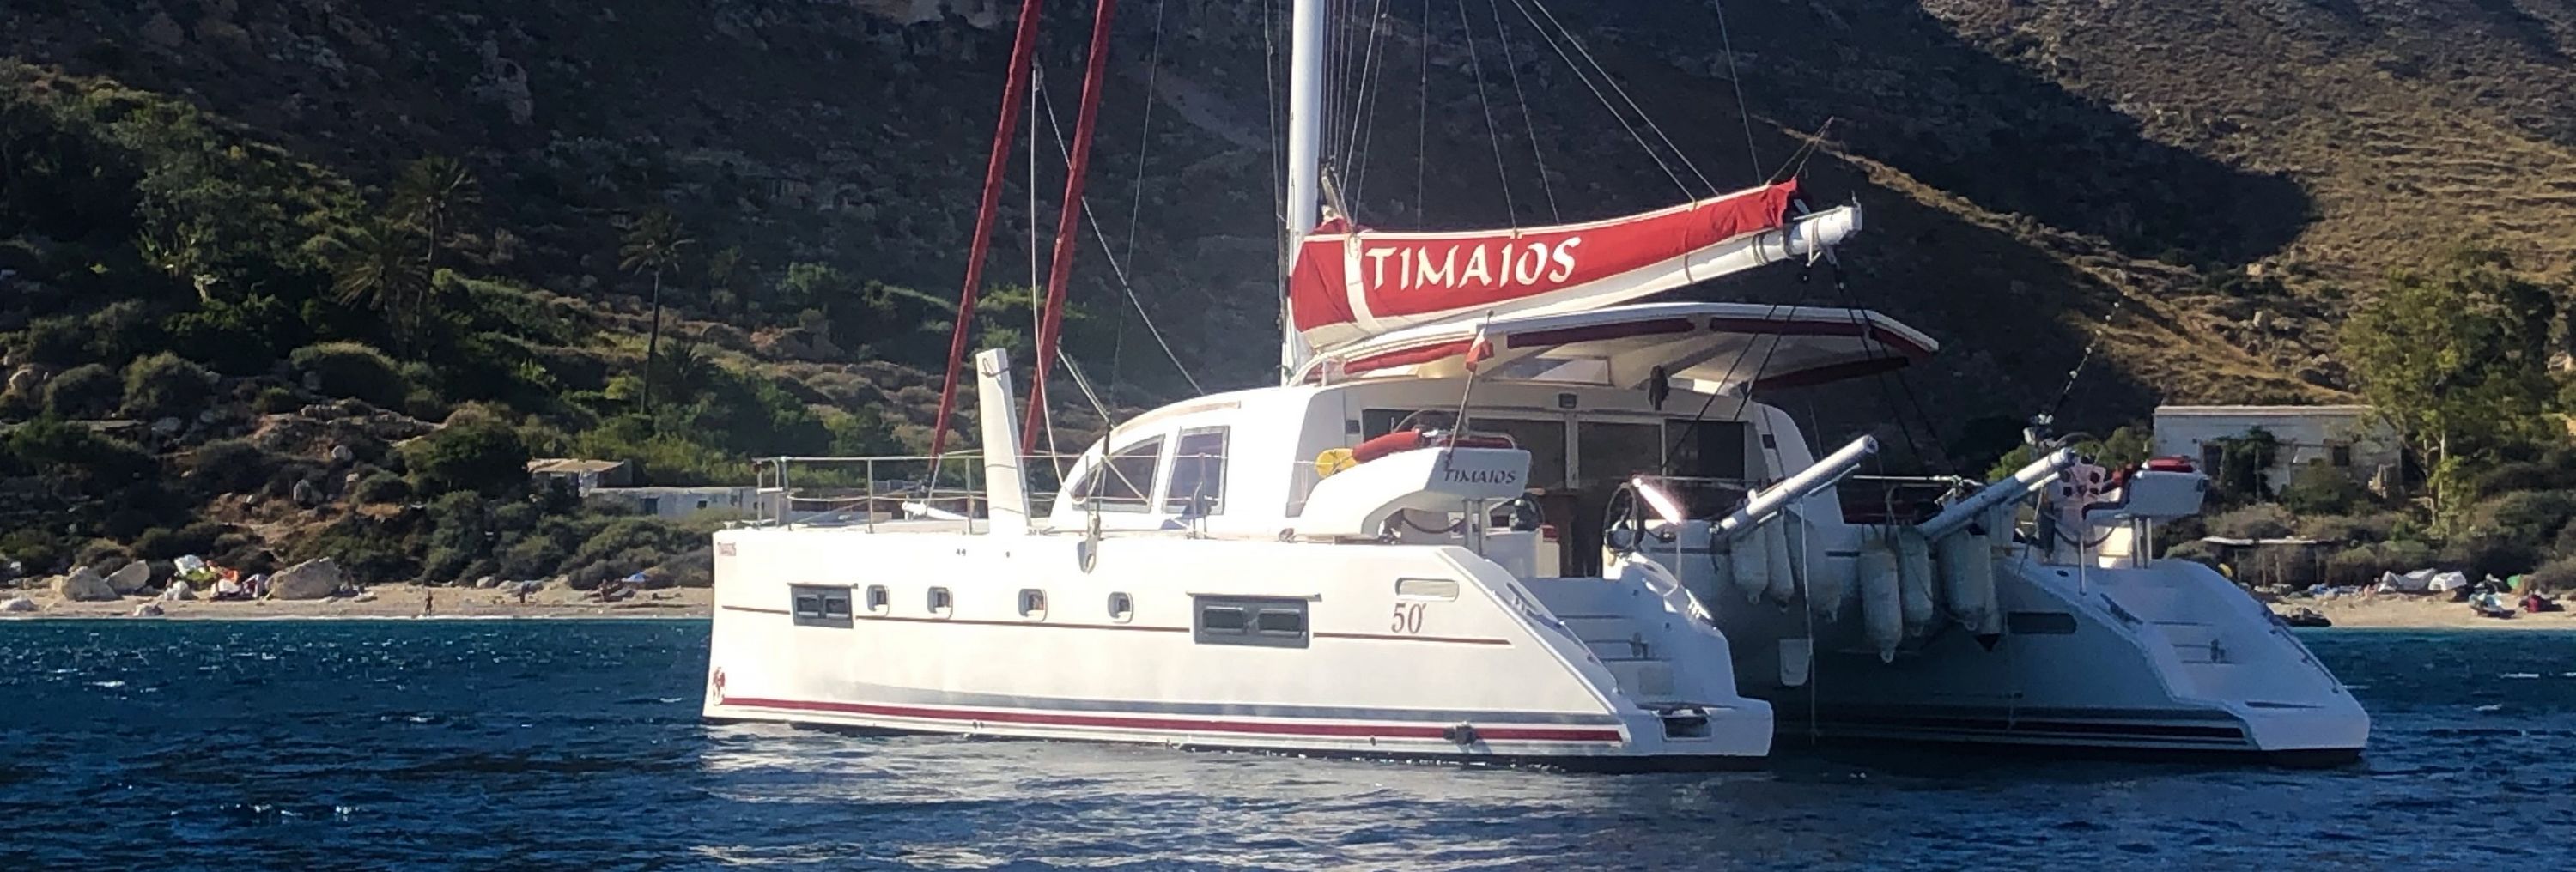 TIMAIOS : New catamaran for Sale